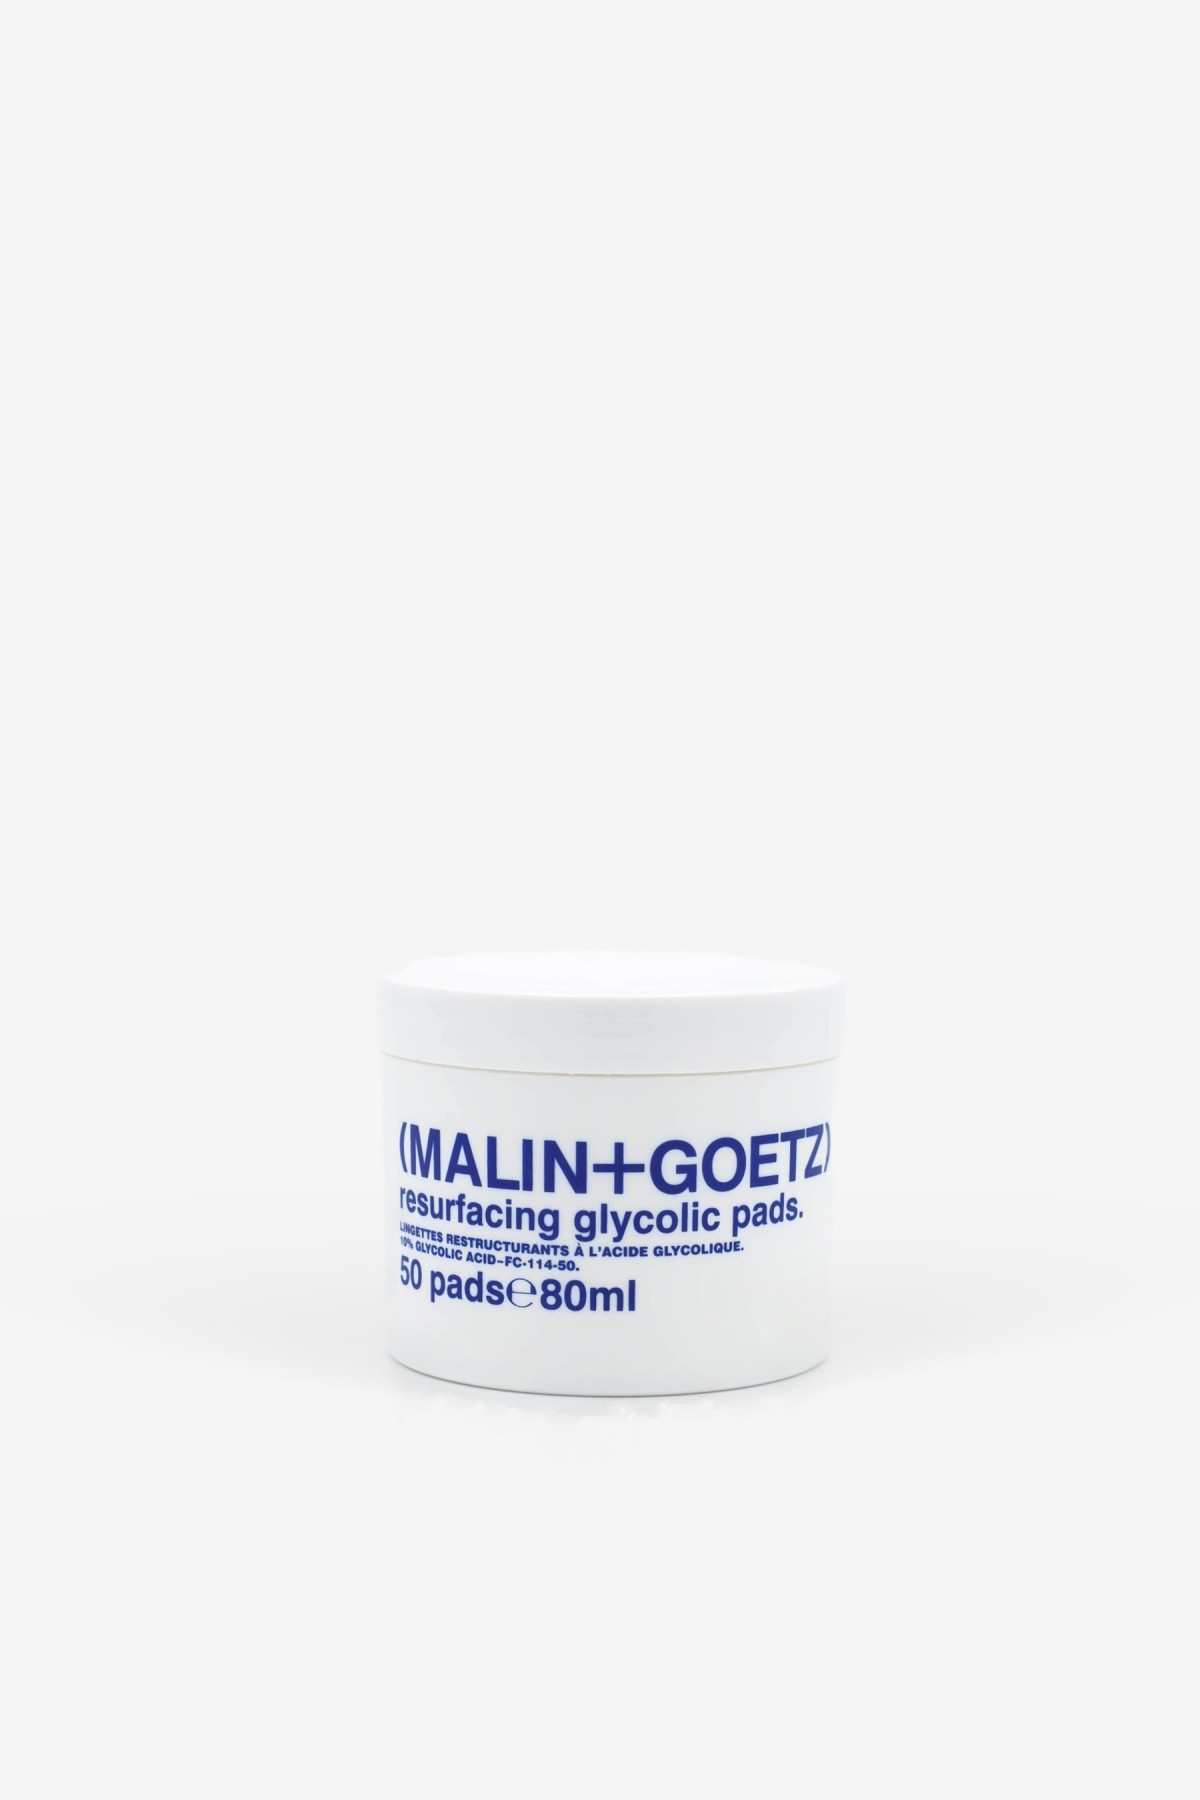 Malin+Goetz Resurfacing Glycolic Acid Pads 80ml in 